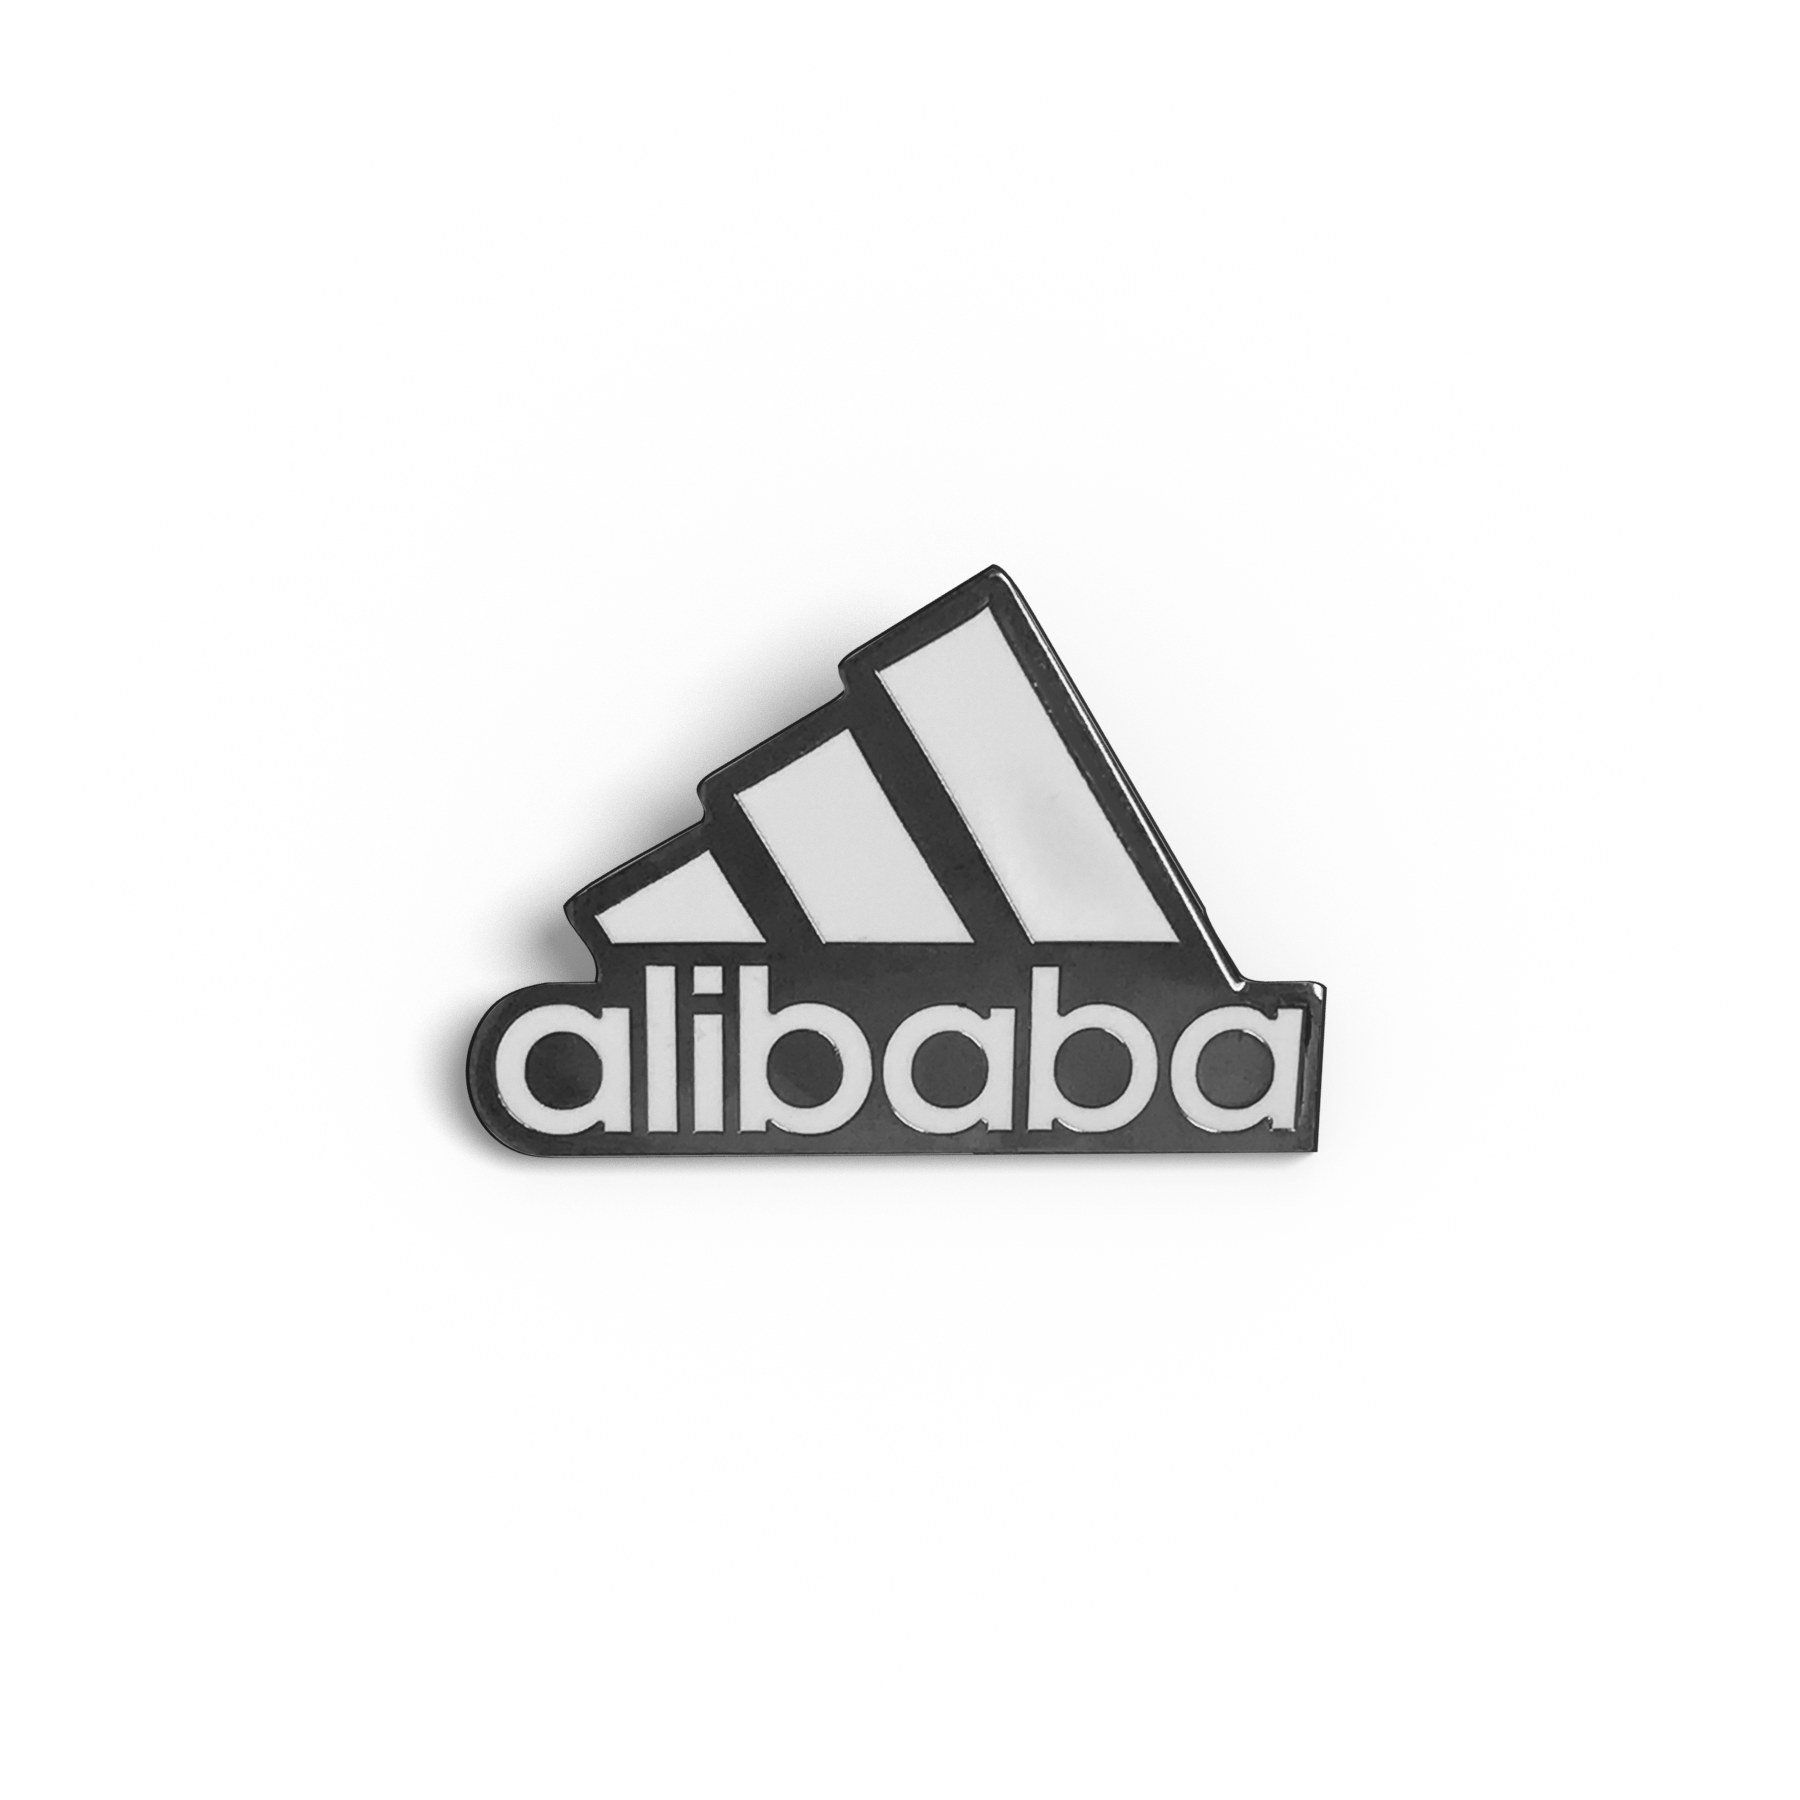 Alibaba enamel pin